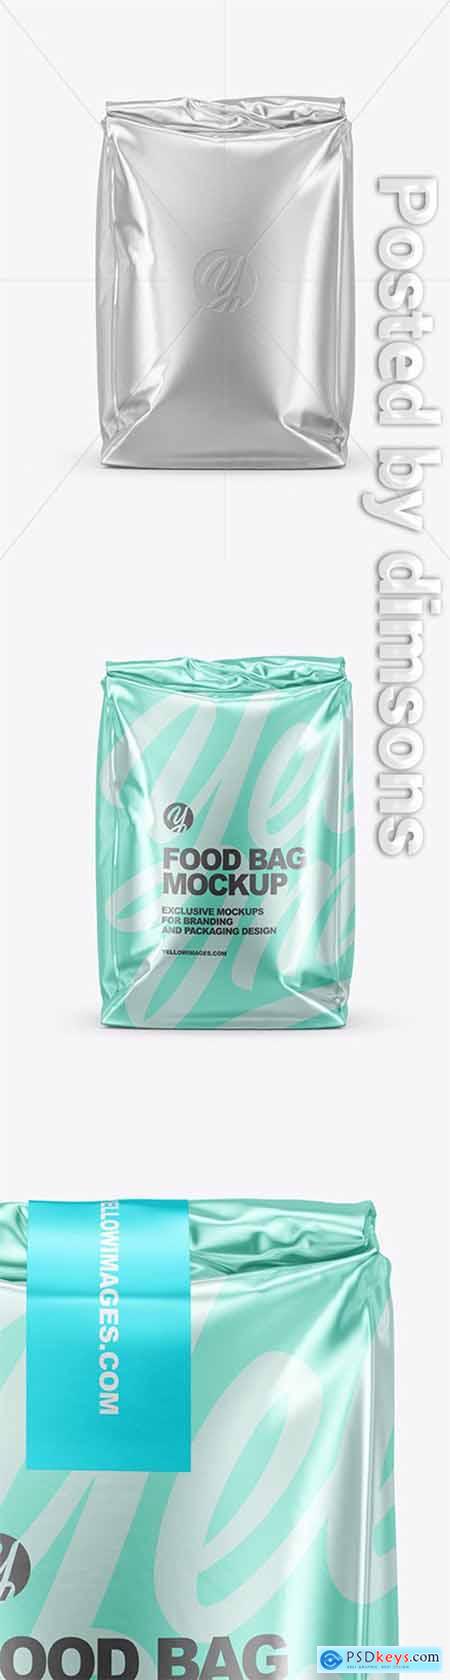 Metallic Food Bag Mockup - Front View 64900